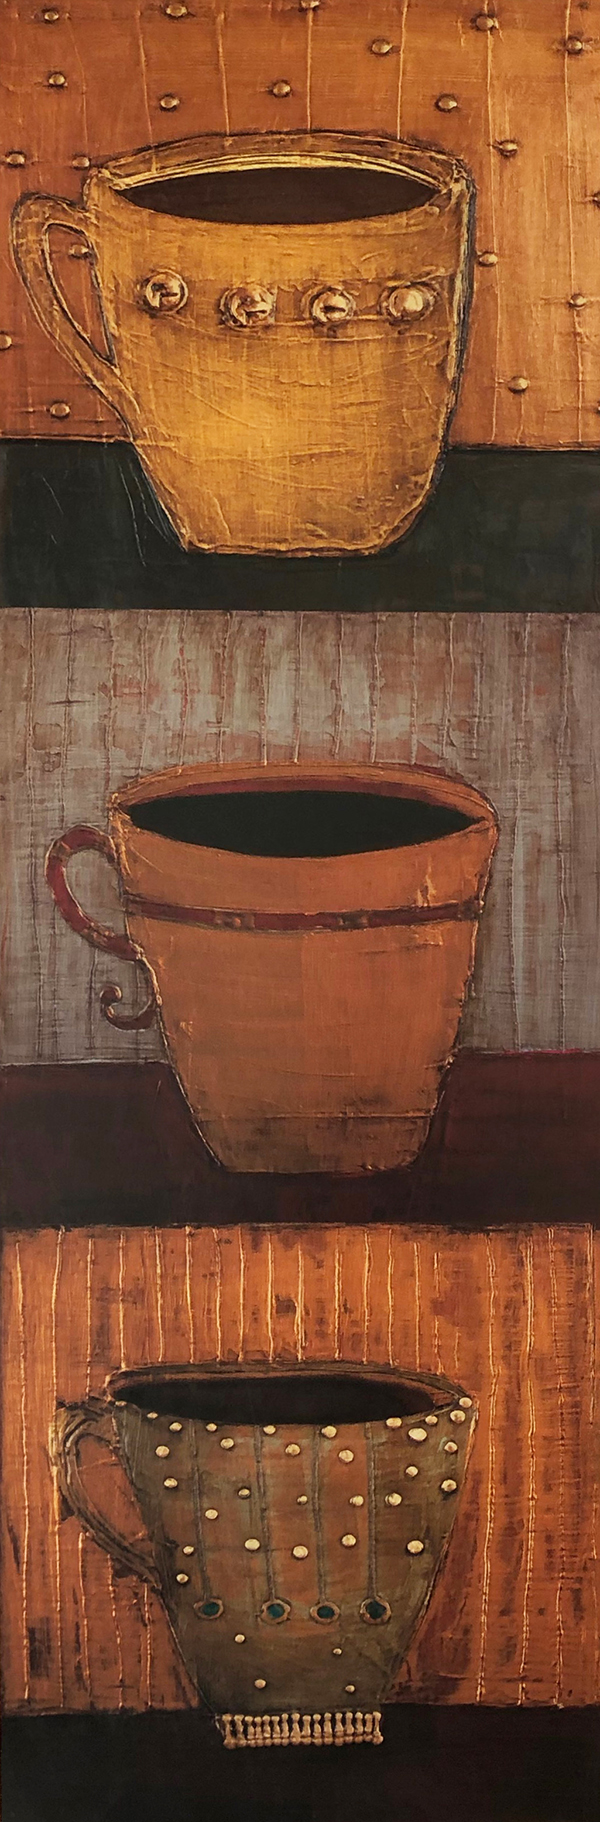 Cup of Joe II